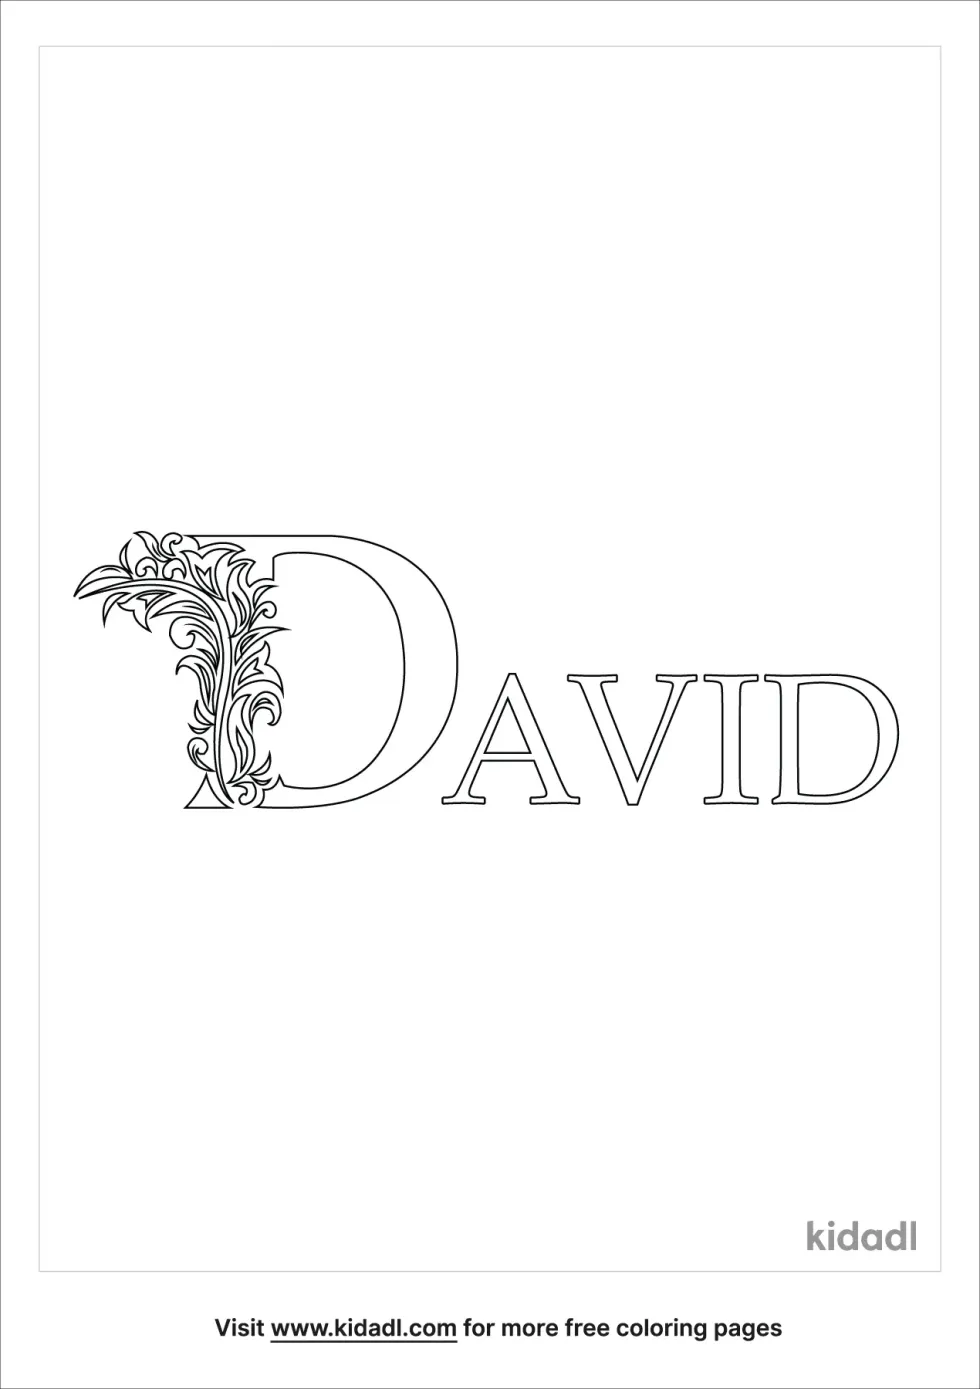 David Name